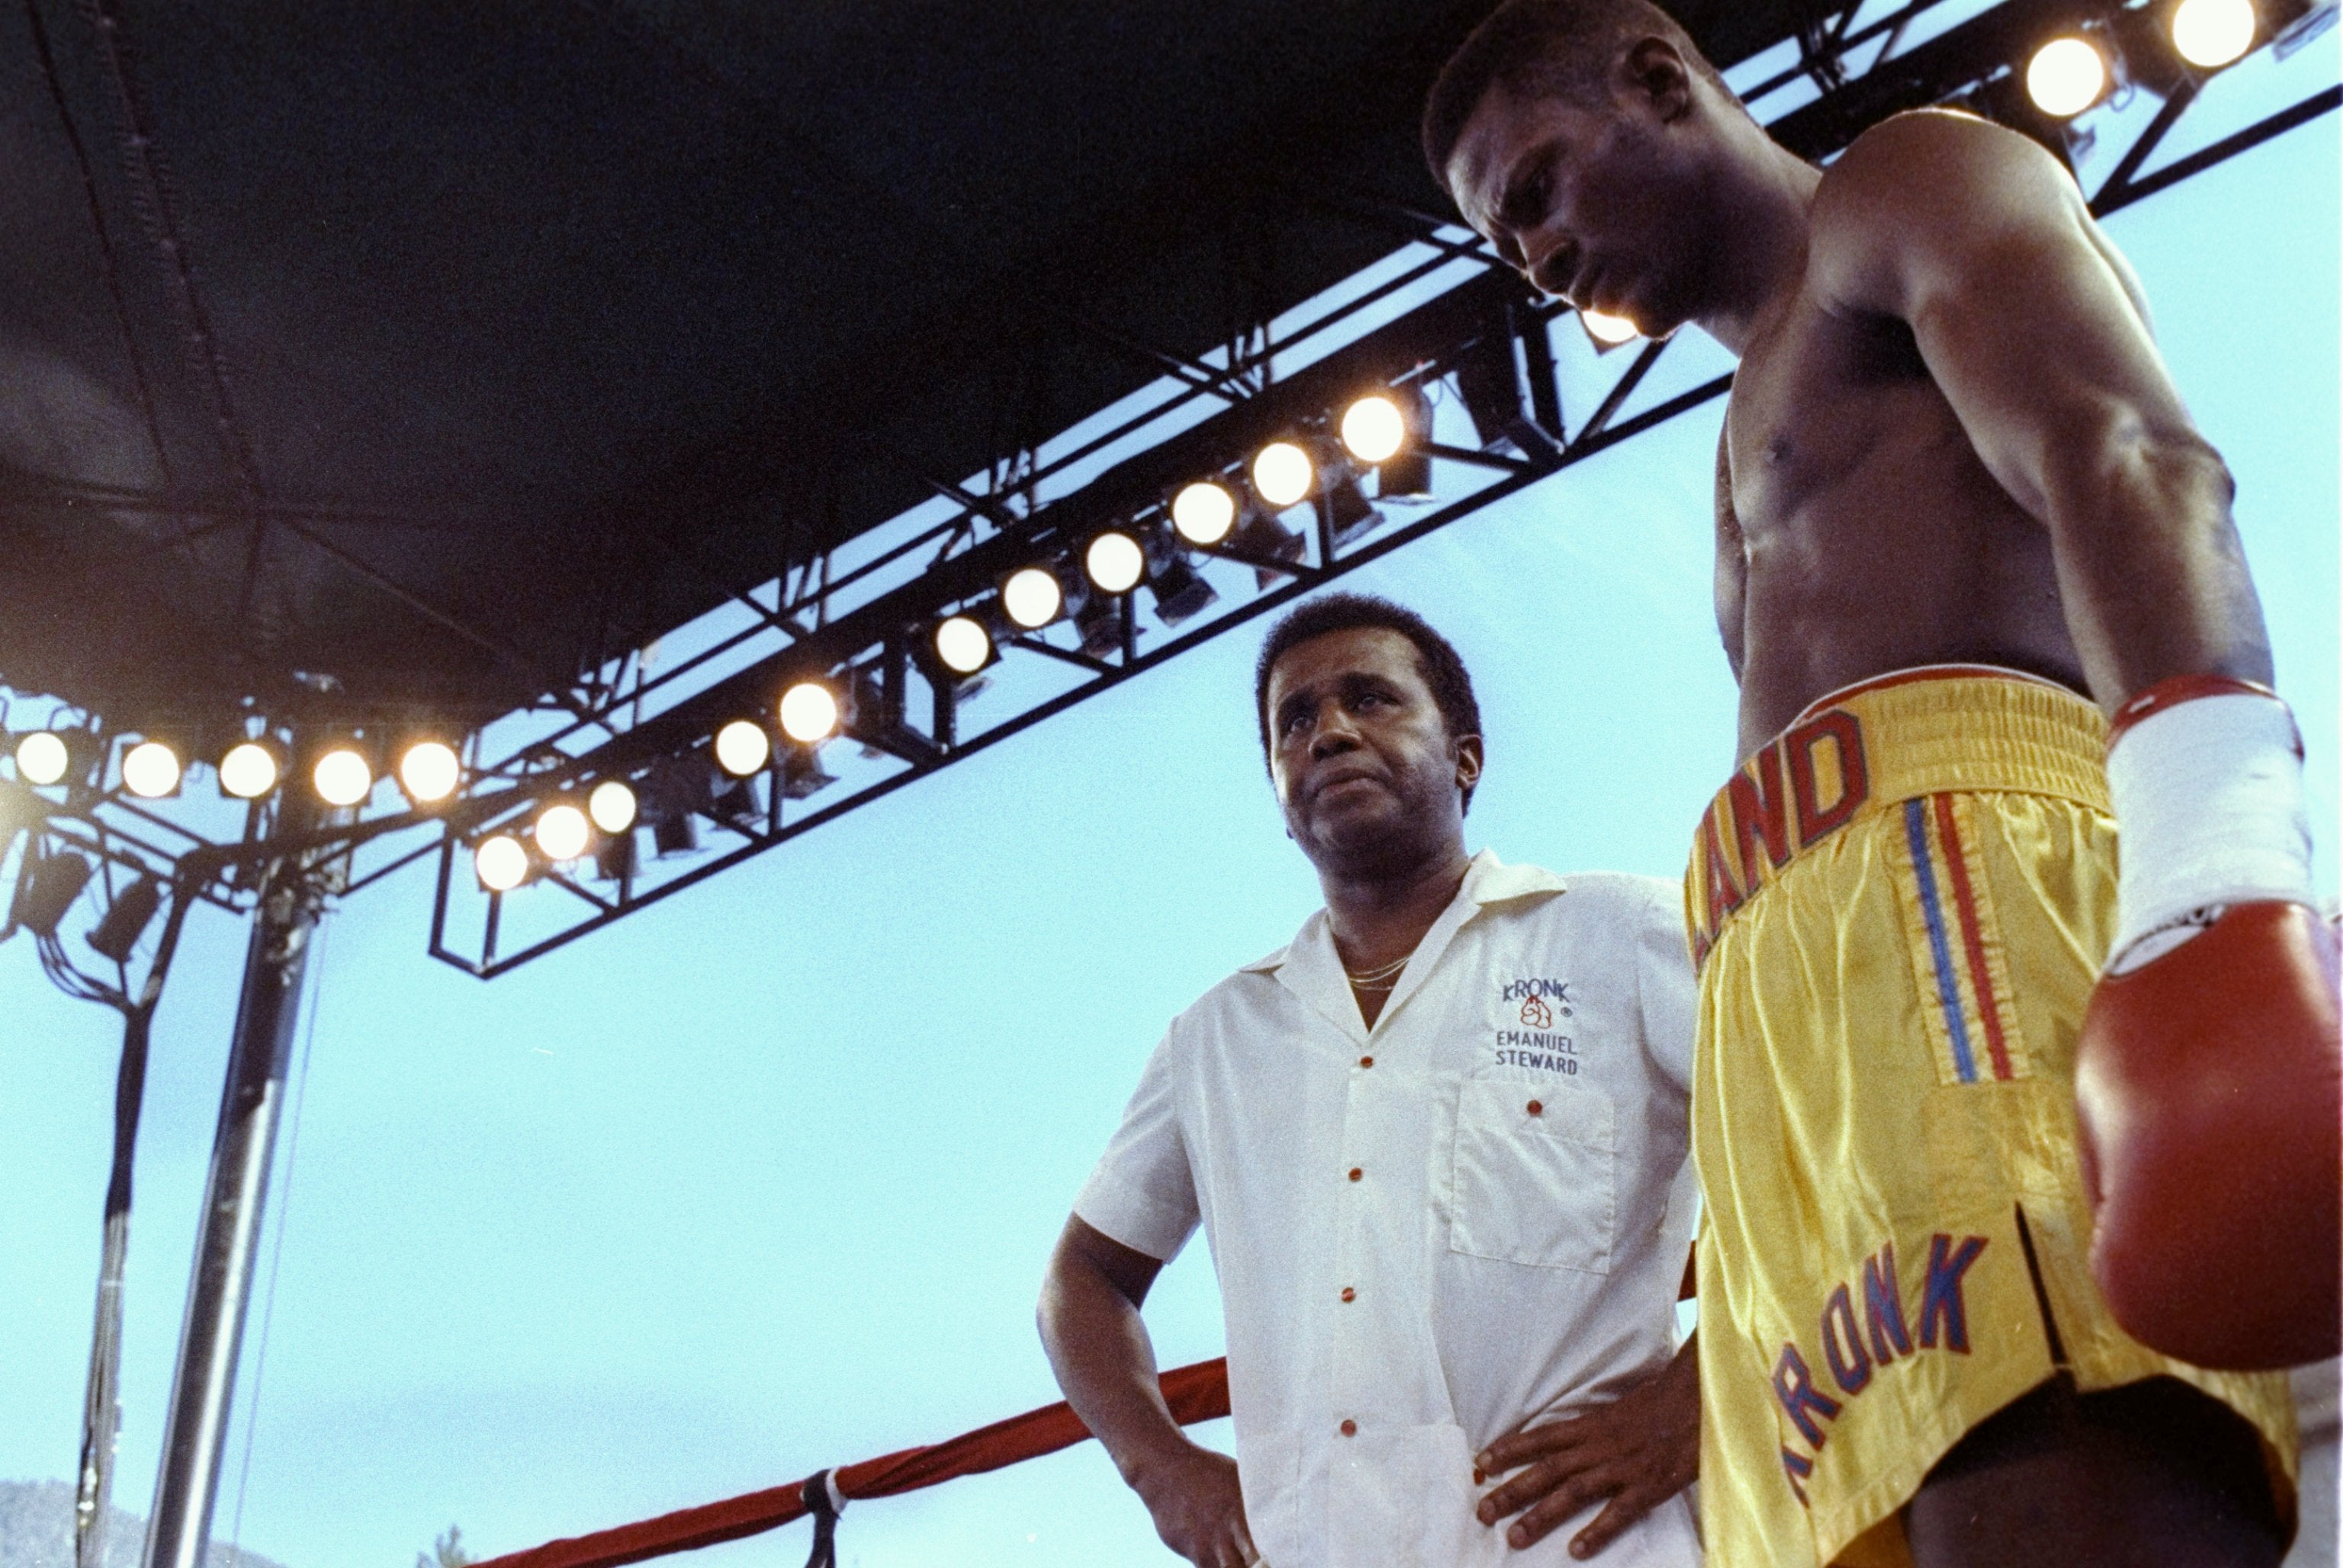 Mark Breland in 1991 alongside legendary trainer Emanuel Steward